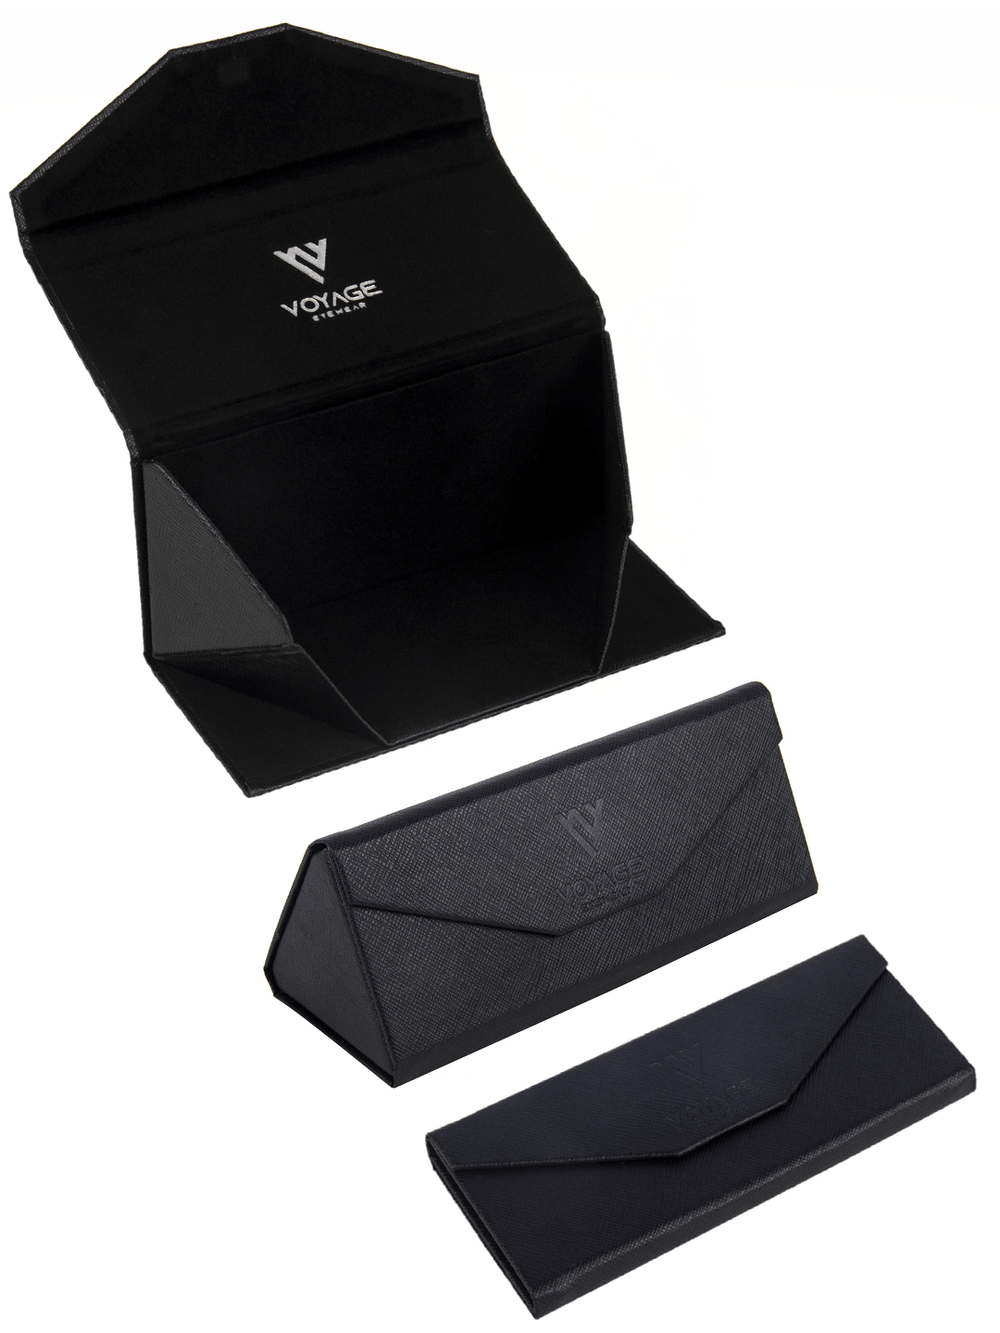 Voyage Exclusive Grey & Black Polarized Round Sunglasses for Men & Women - PMG4313